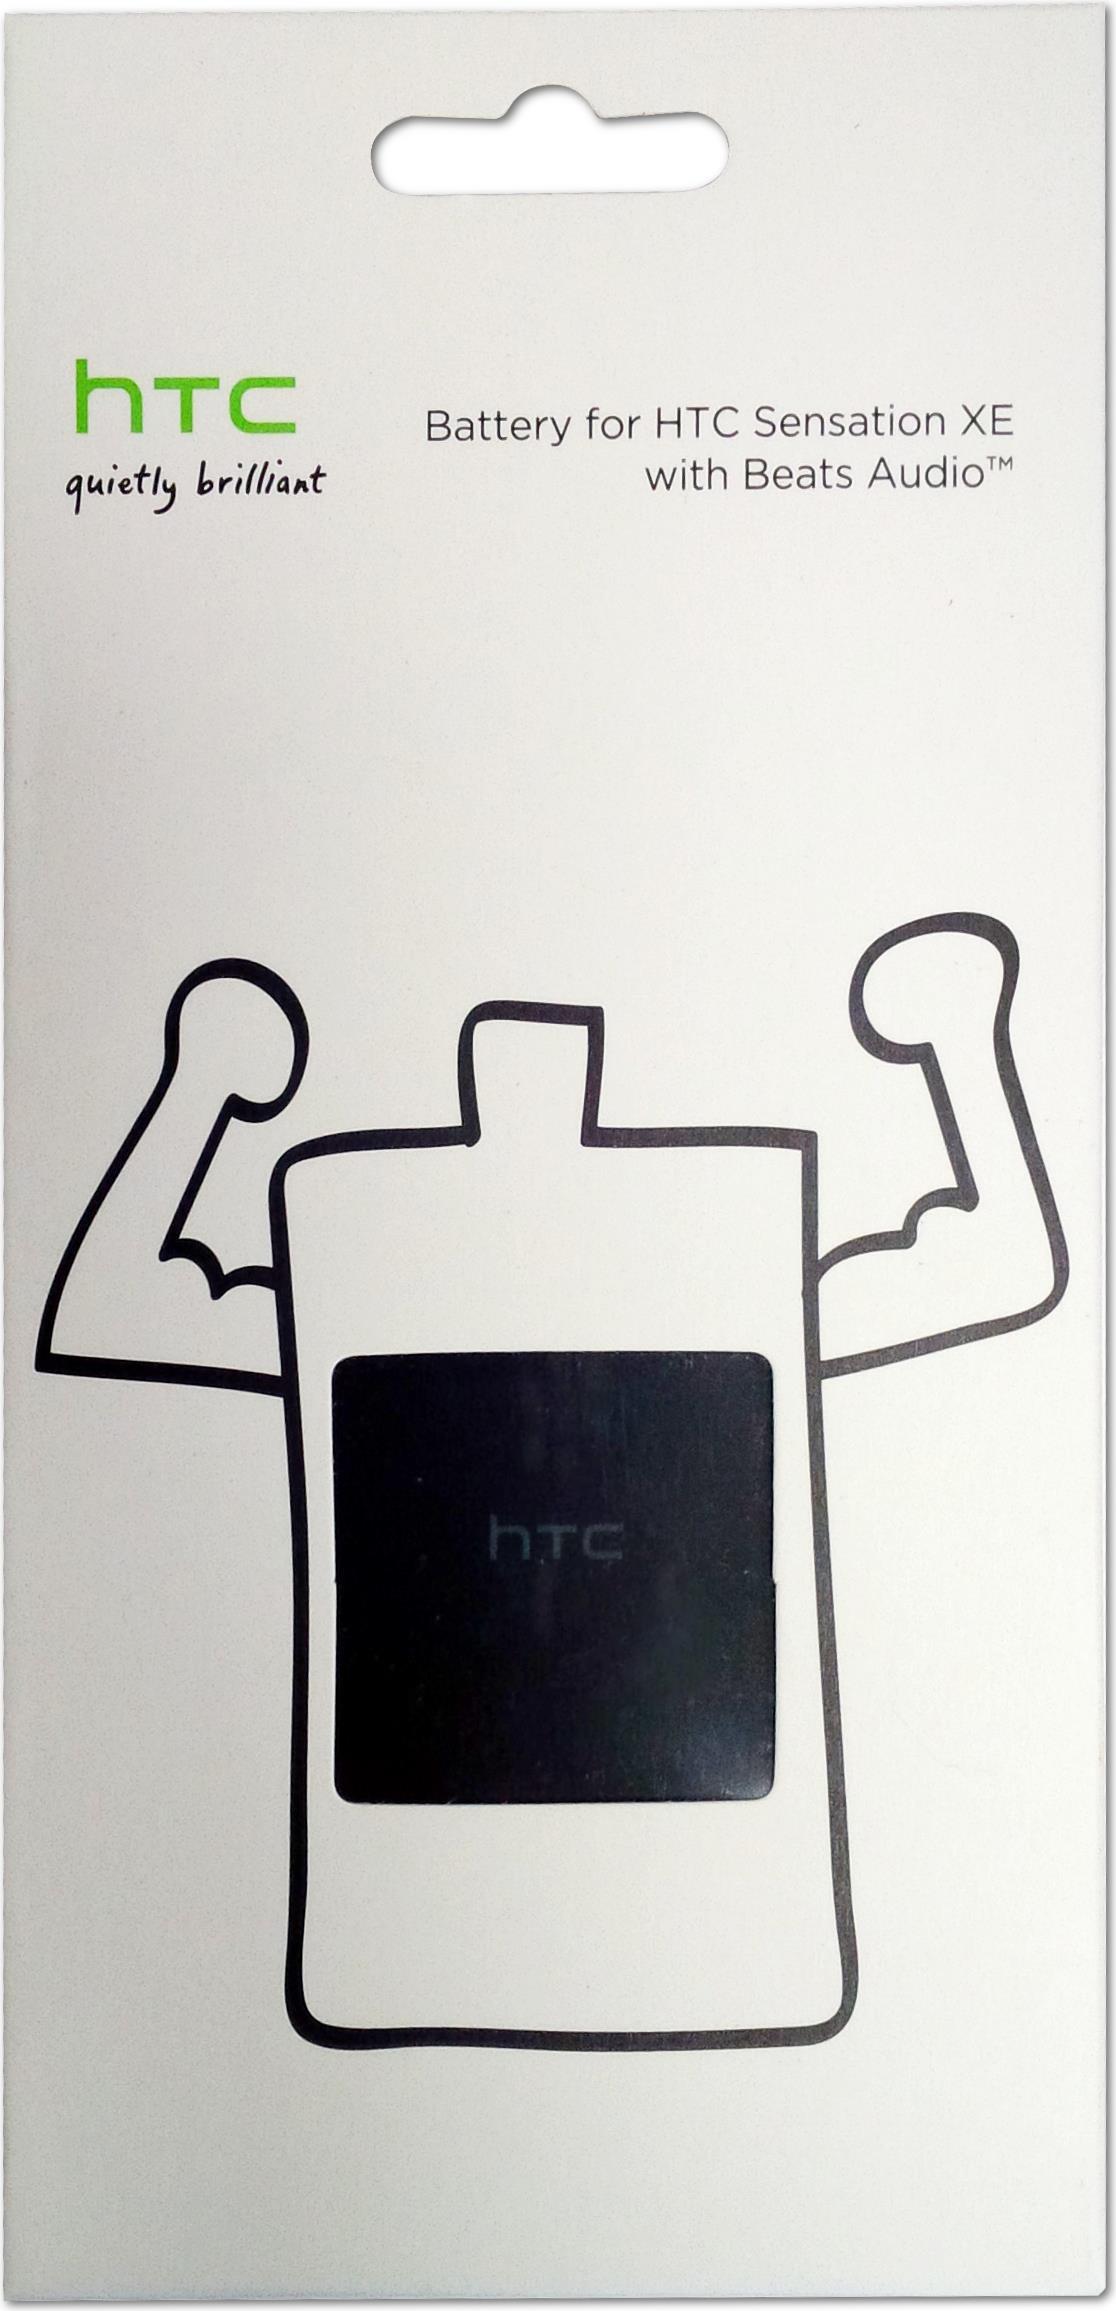 HTC Akku BA-S780 99H10597-00, 1730 mAh, Blister (BA-S780 99H10597-00)